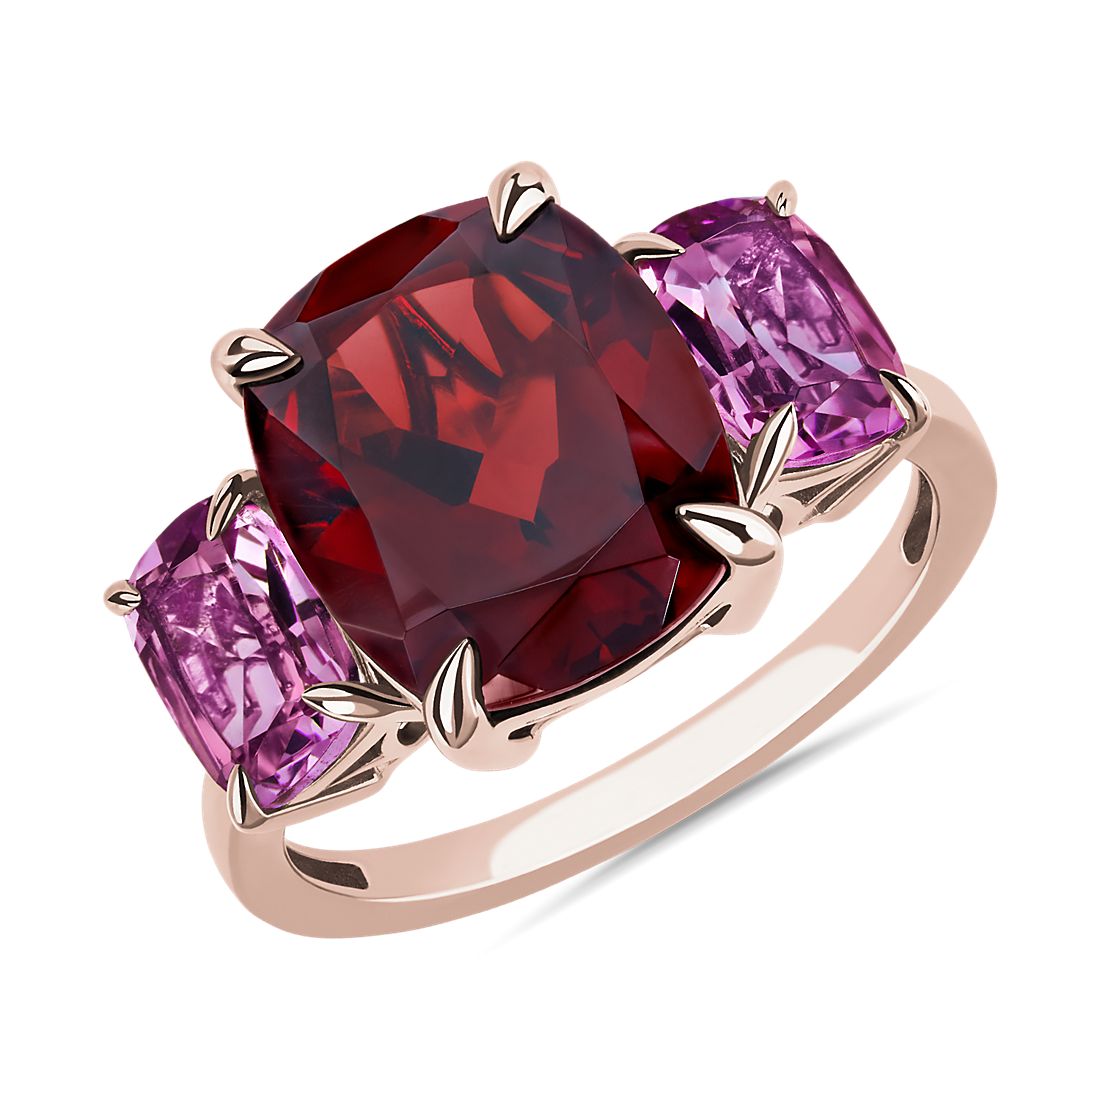 3-Stone Elongated Cushion Cut Garnet and Purple Rhodolite Ring in 14k Rose Gold